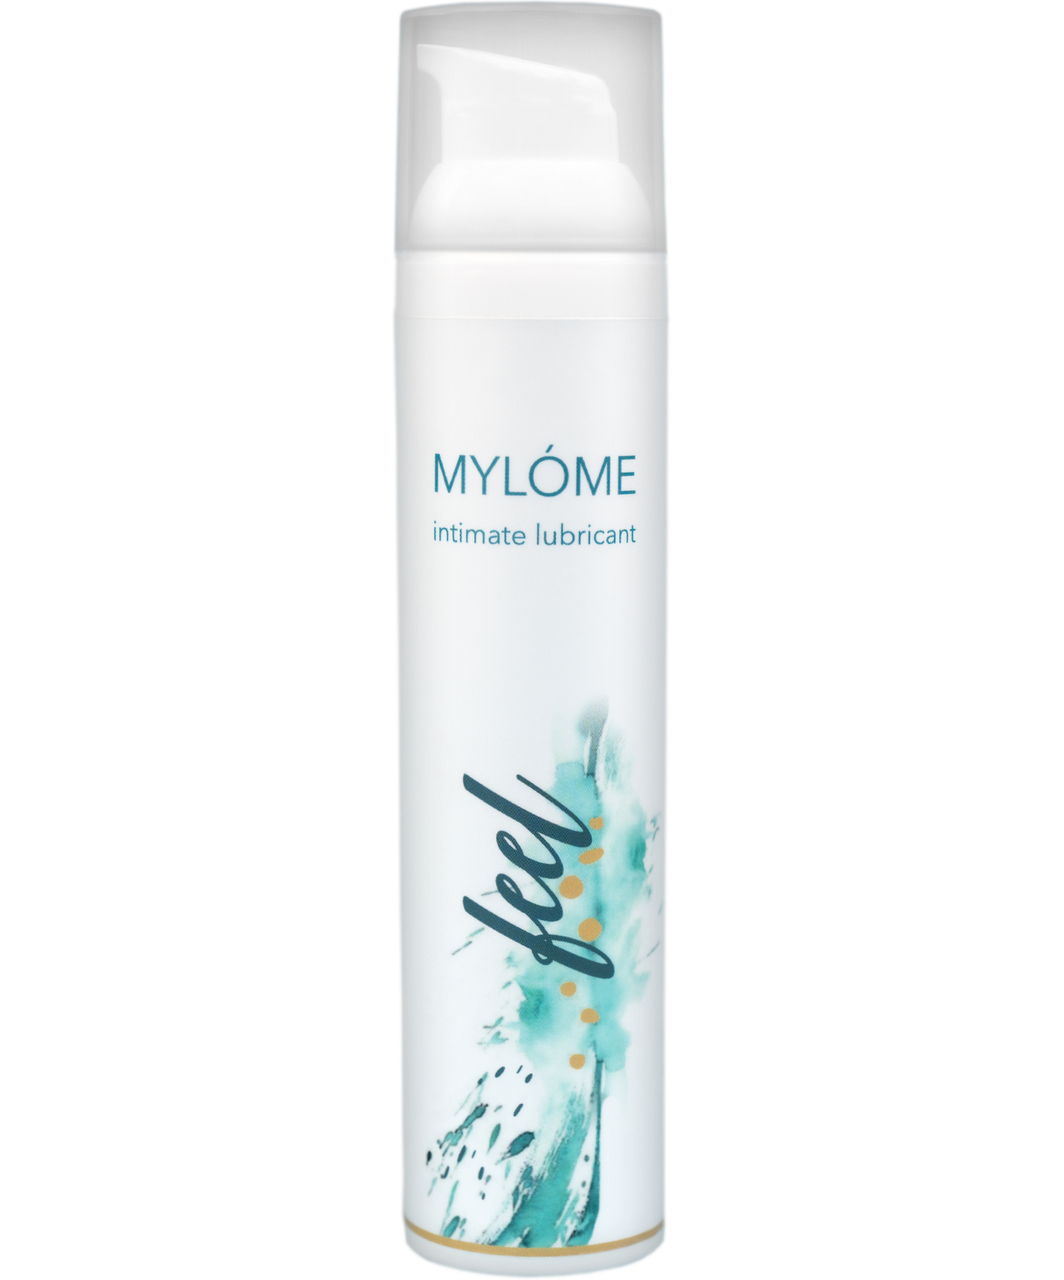 MYLOME Feel vandens pagrindu lubrikantas (50 / 100 ml)